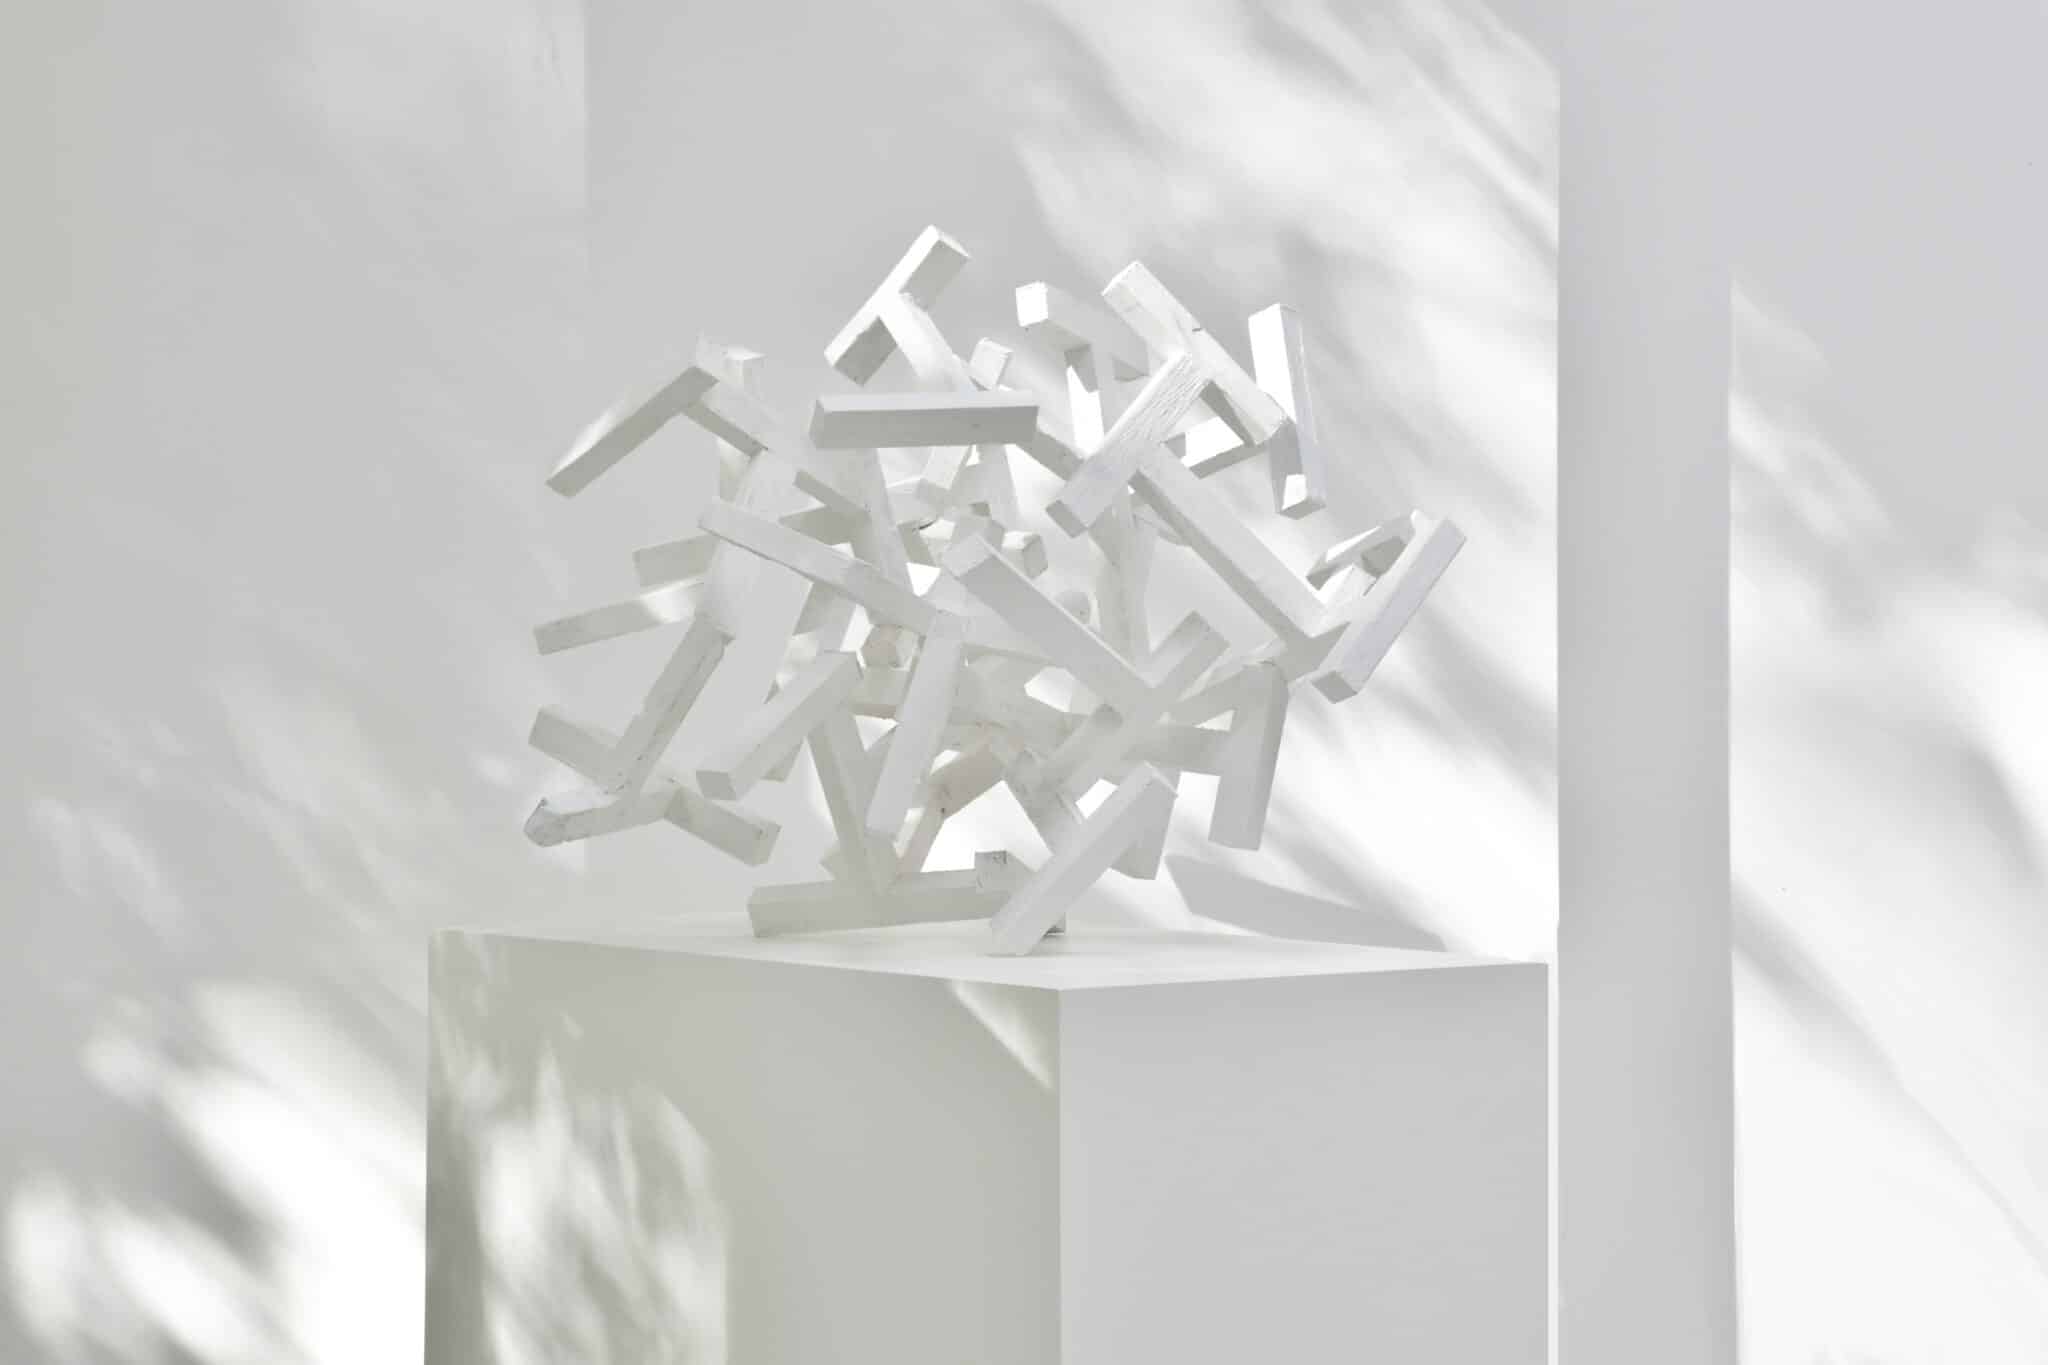 Indoor sculpture white painted wood by annet van egmond